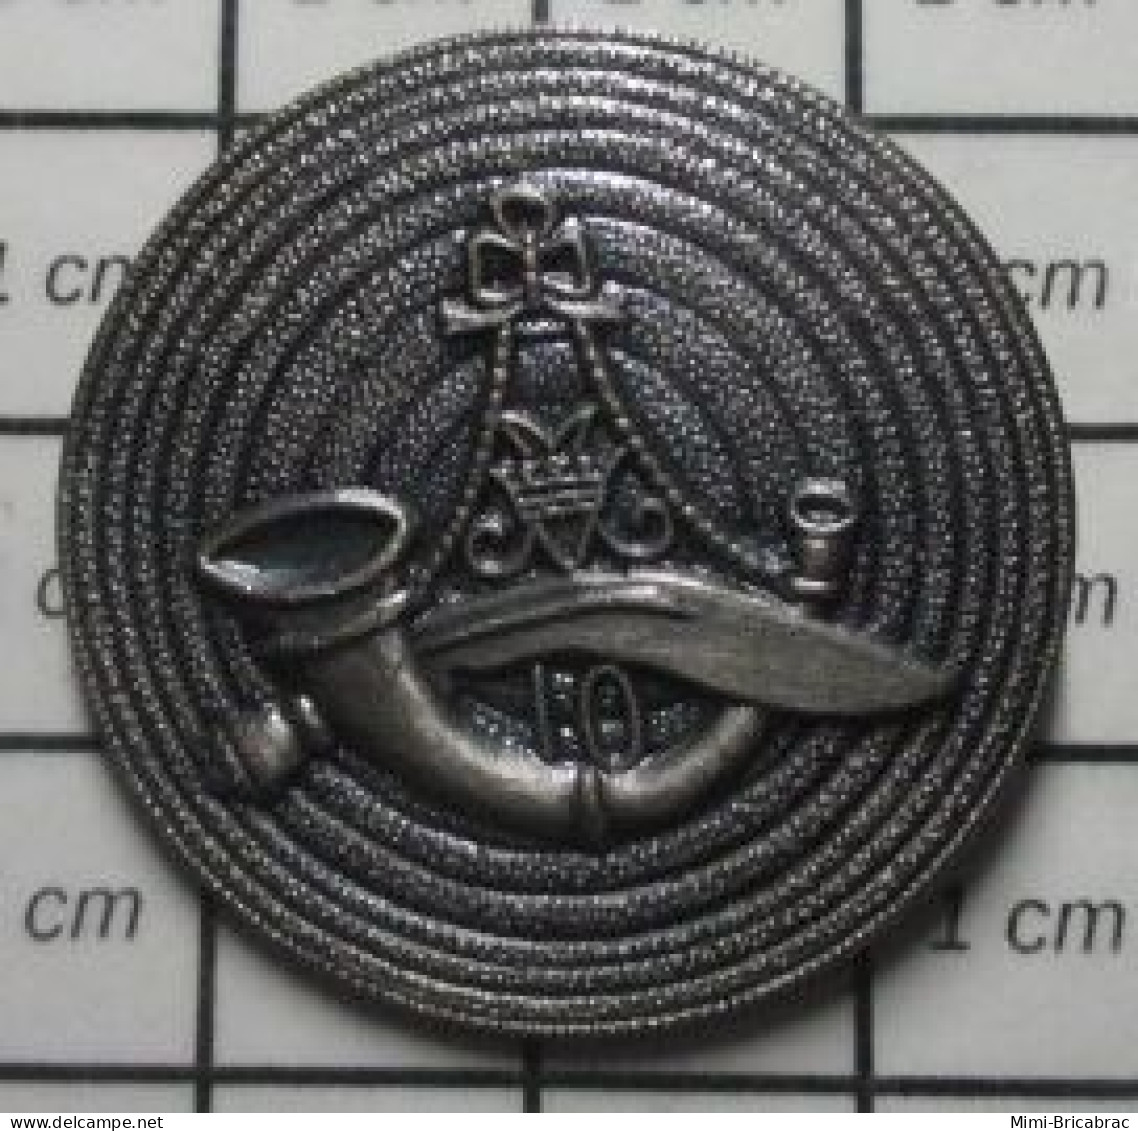 713c Pin's Pins / Beau Et Rare / MILITARIA / INSIGNE TROUPES D'ELITE 10e GURKHA NEPAL KRISS - Army